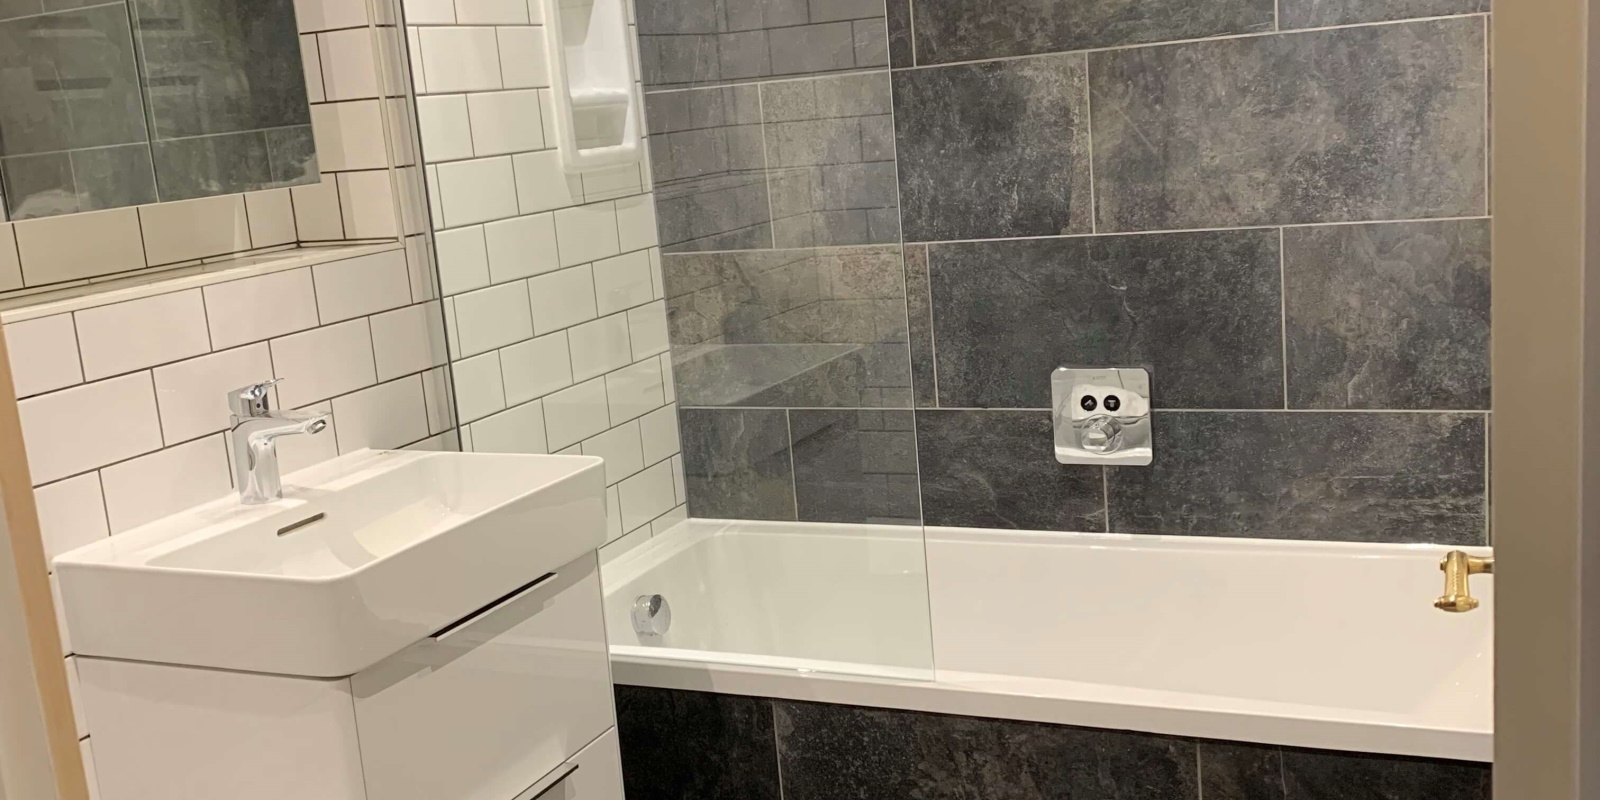 Bathroom Installations